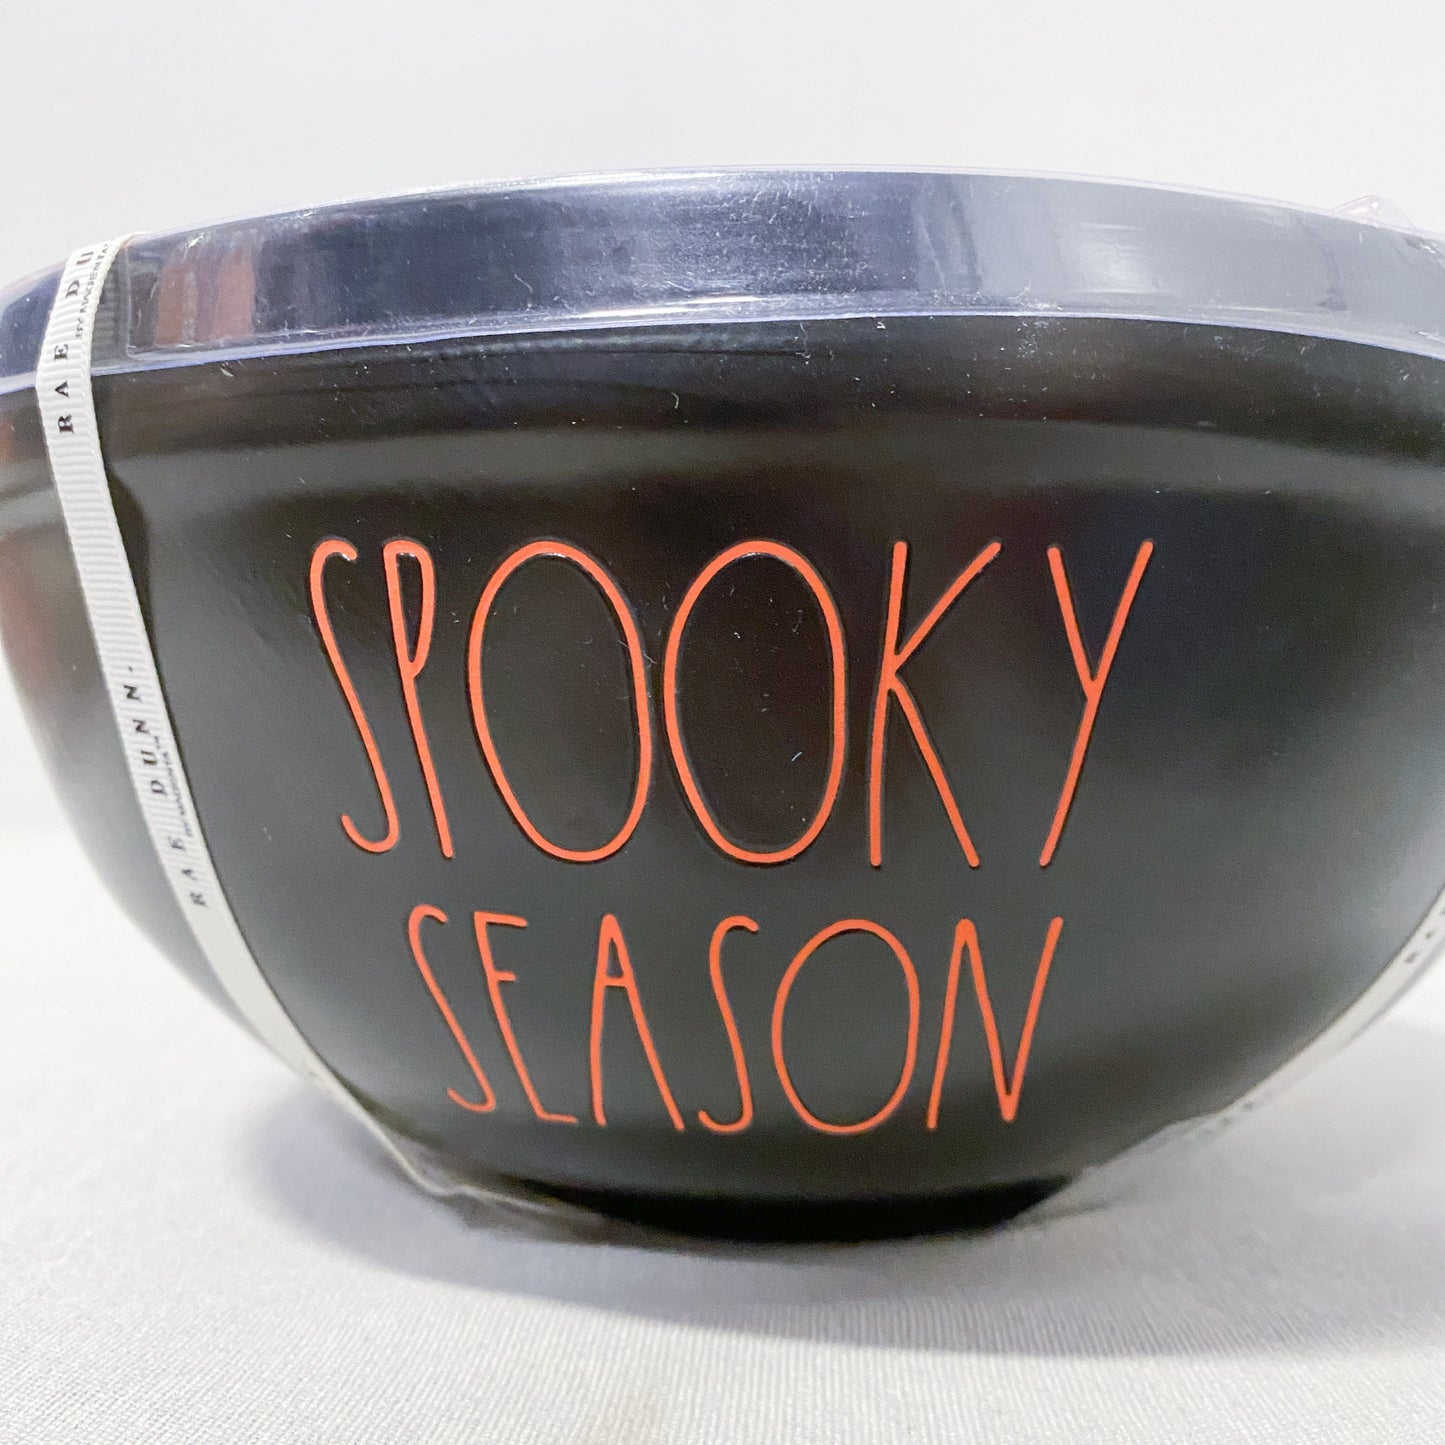 'Spooky Season' Mixing Bowl & Spatula